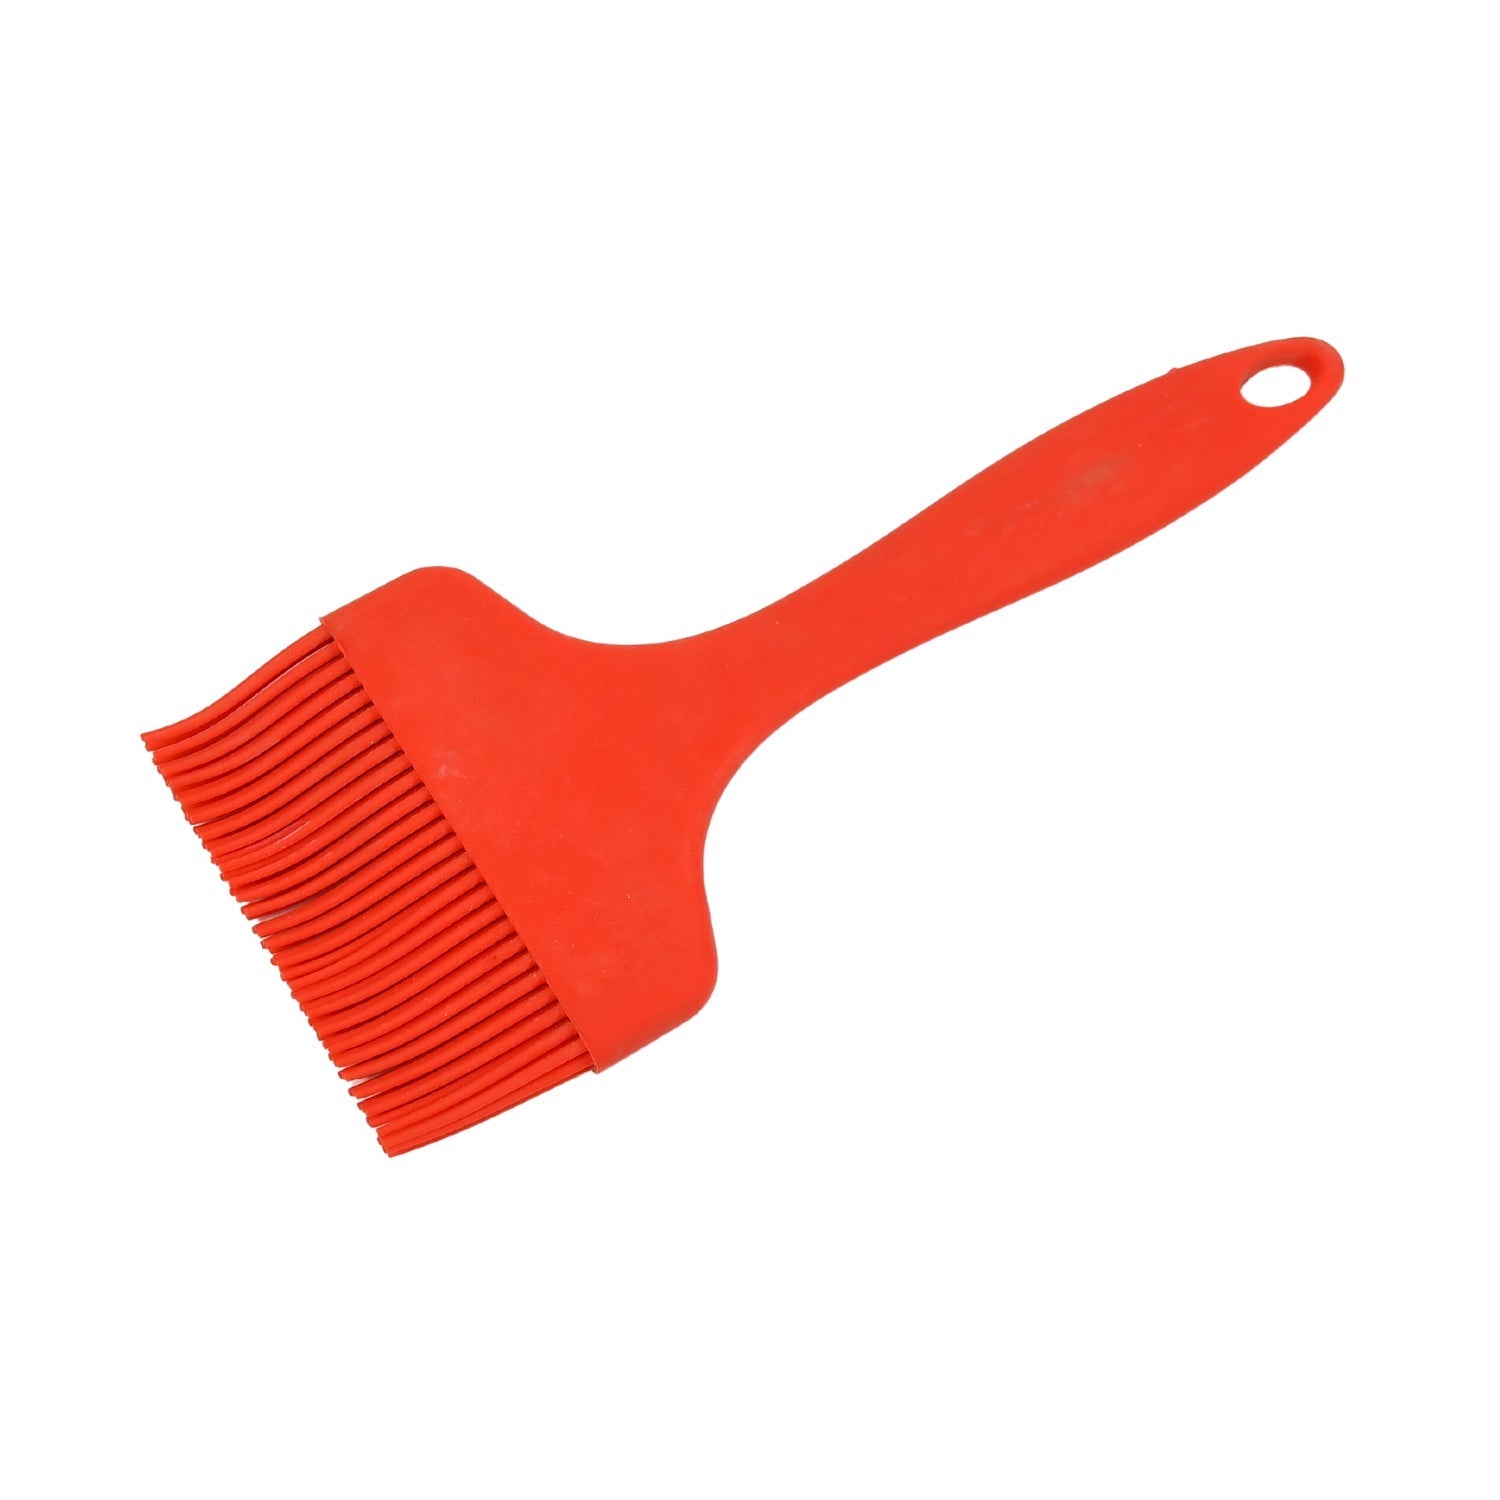 5383 Silicone Premium Brush with Grip Handle, Silicone Brush Baking Bread Cooking Oil Cream Tools Multipurpose Kitchen Utensil Tool, Red. DoeDap